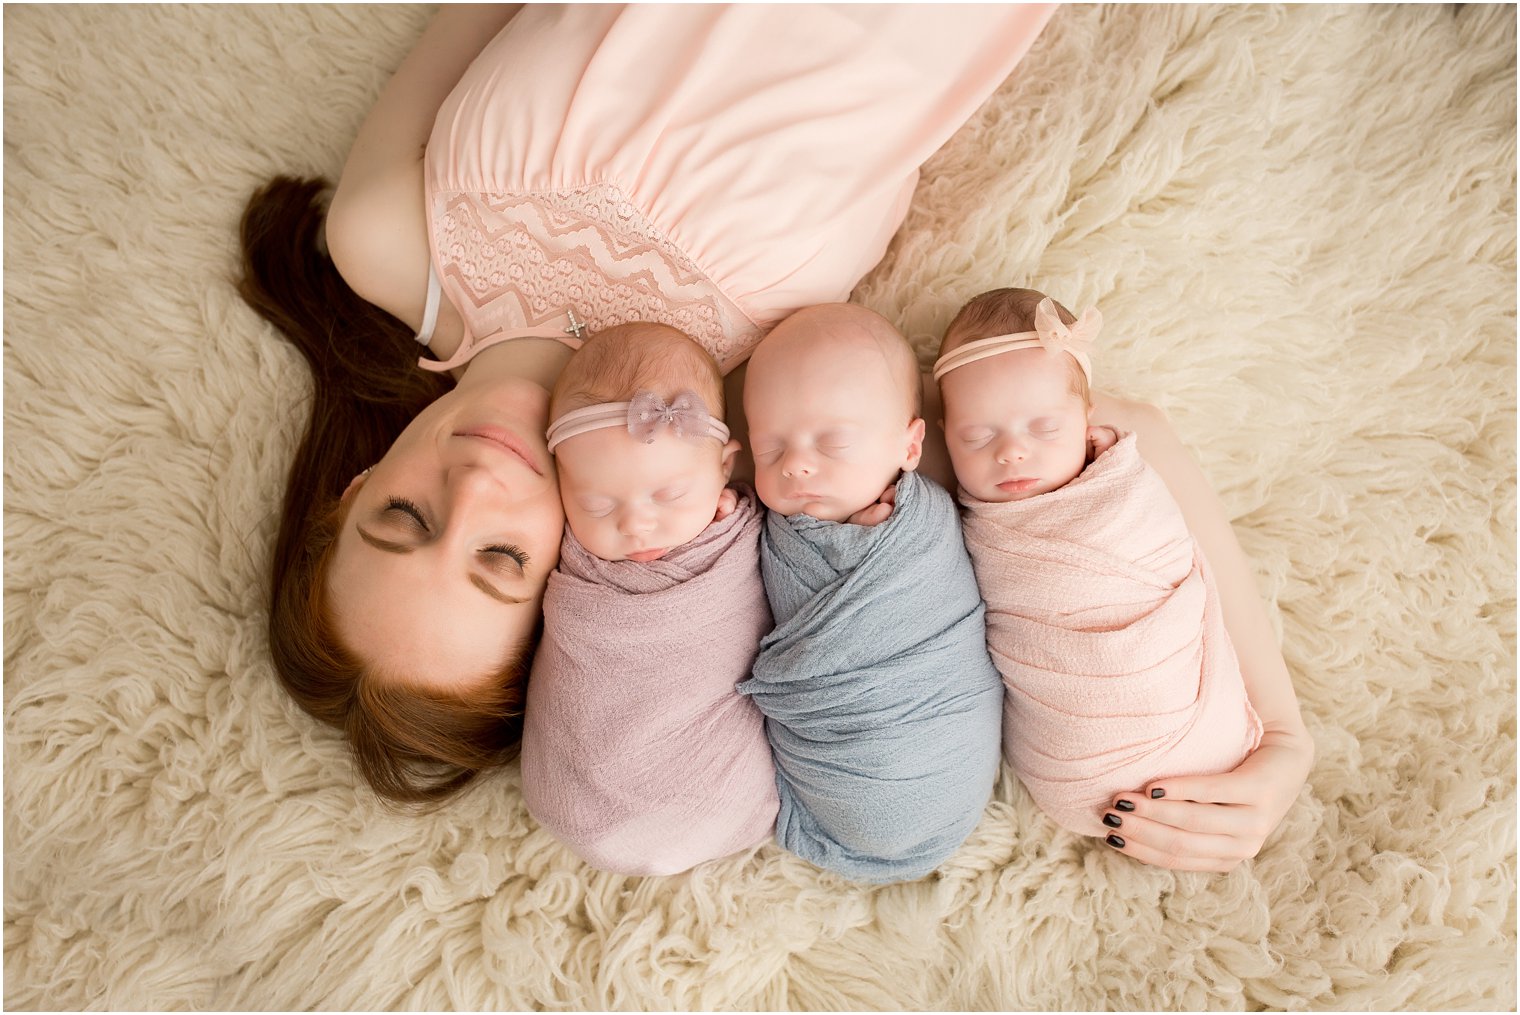 Sweet photo of mom and newborn babies